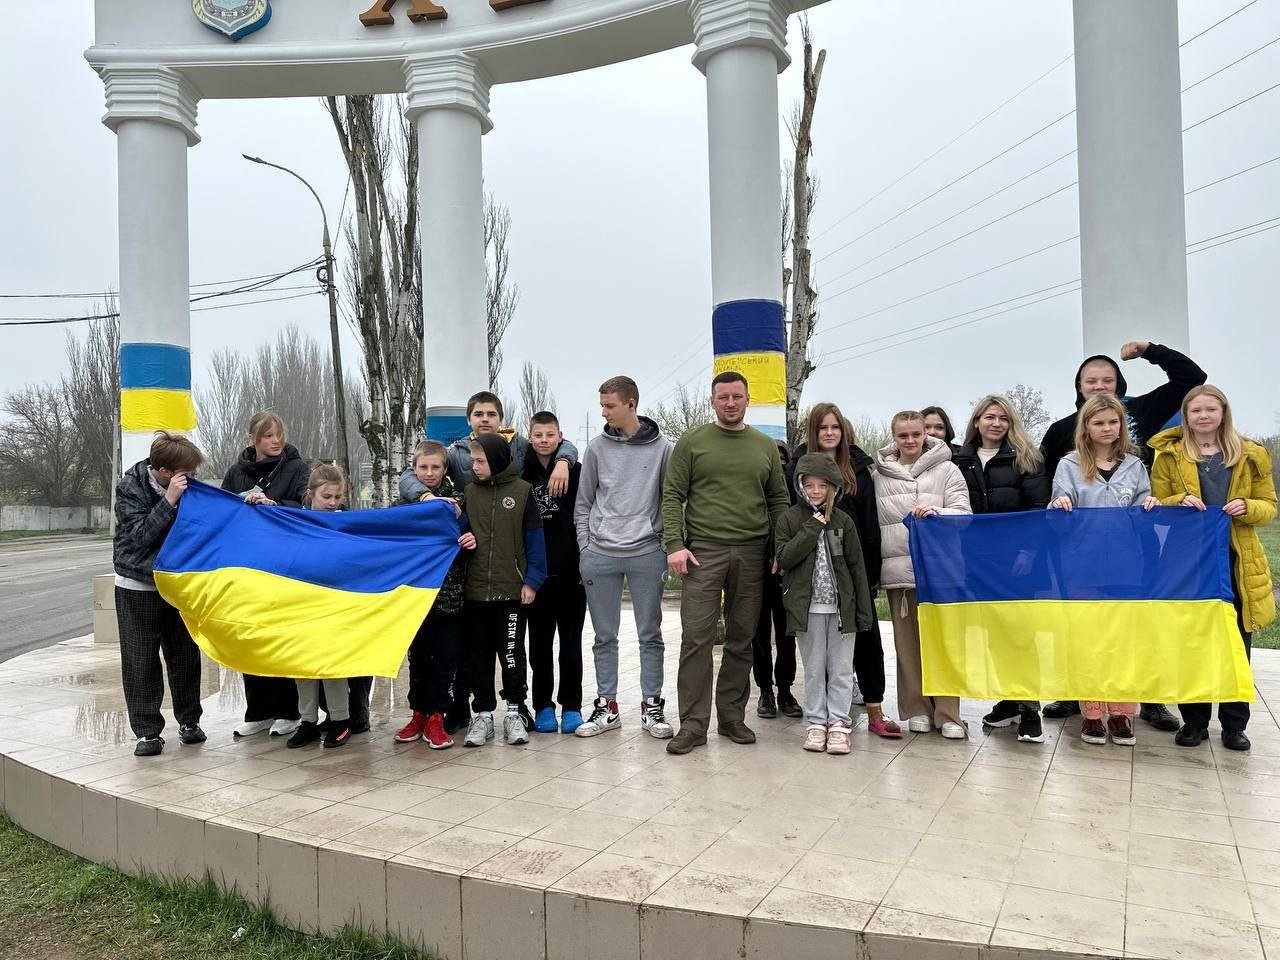 Children from Kherson, Ukraine, return home after detainment in Russia.